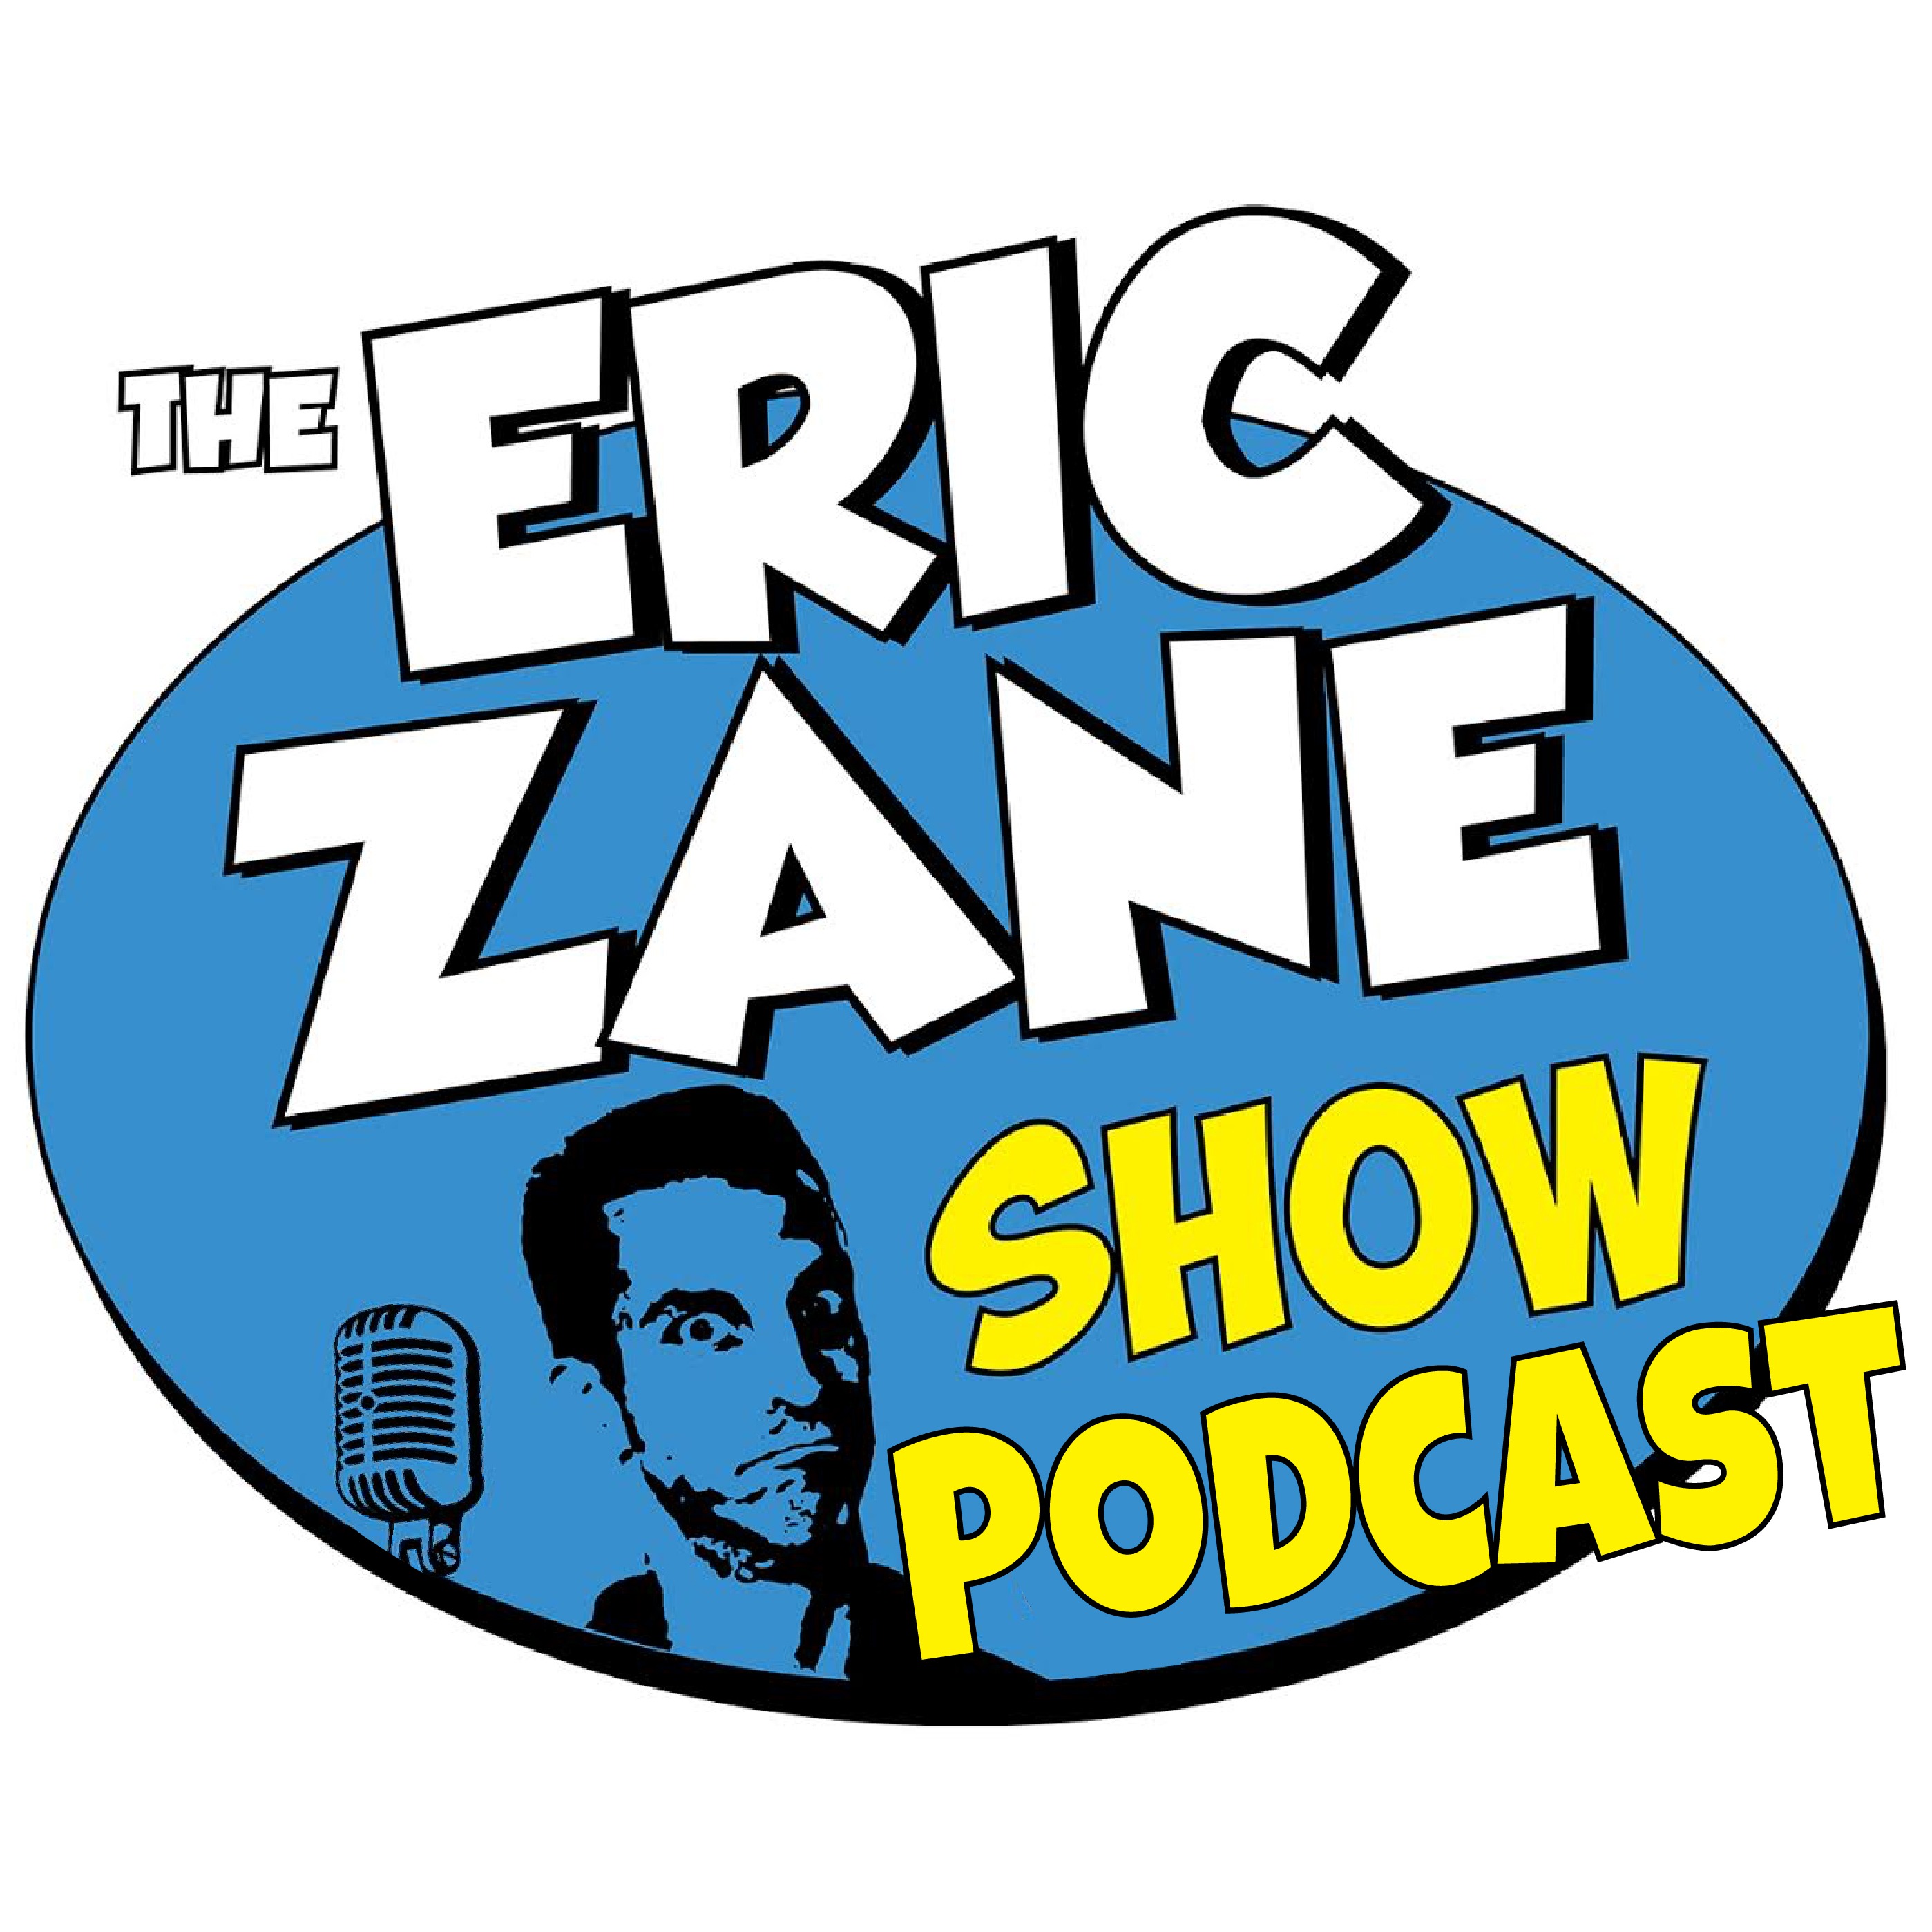 Eric Zane Show Podcast Ep 851 Jesus and Trump take the wheel